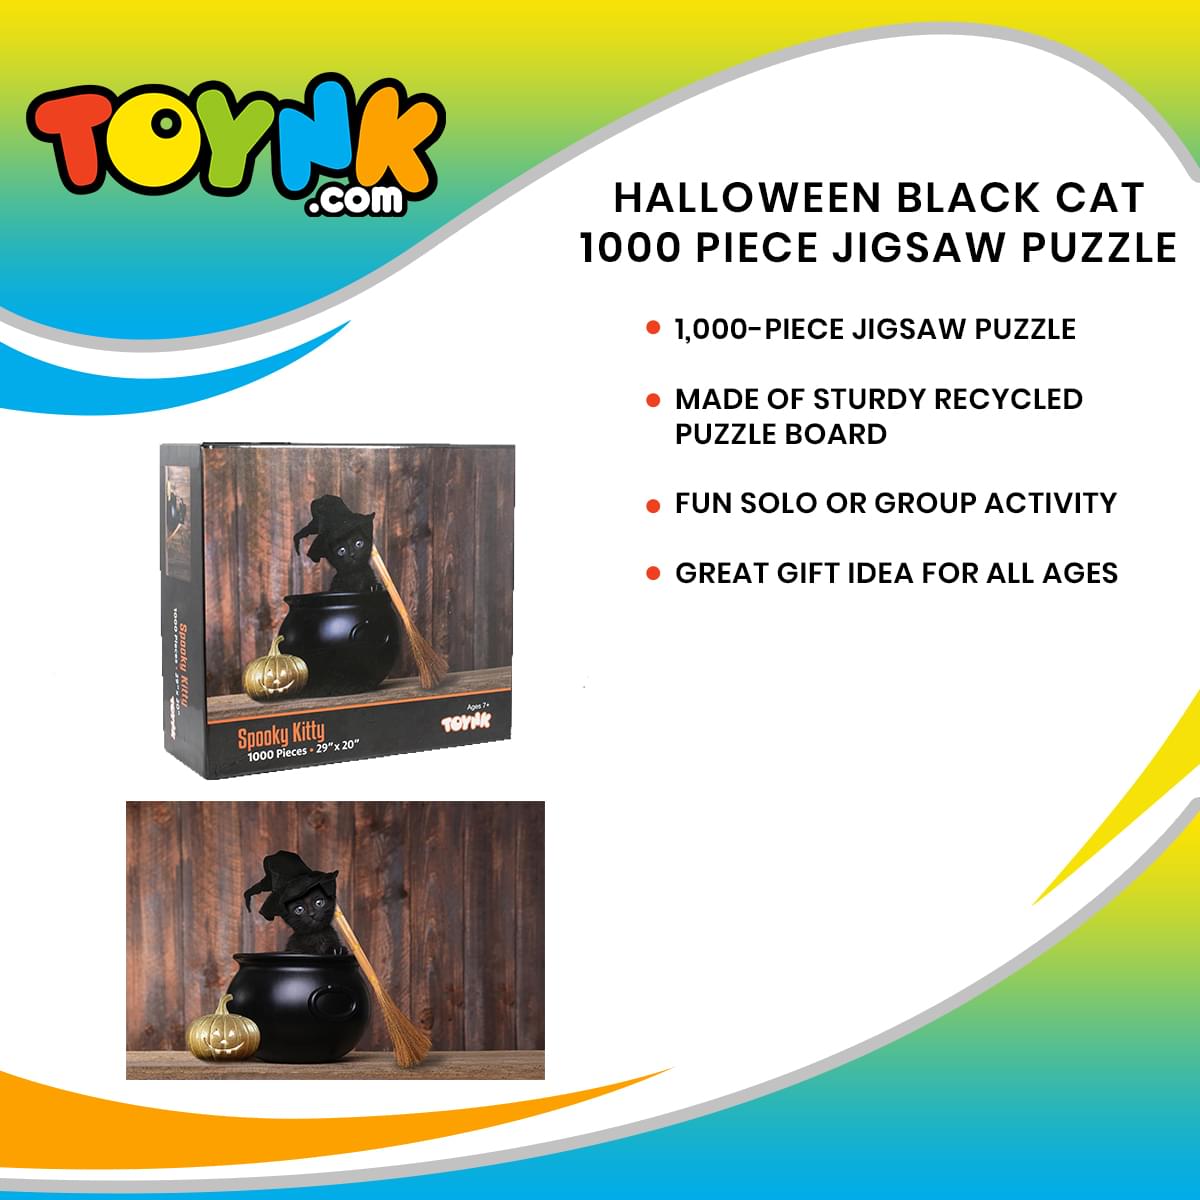 Spooky Kitty Halloween Black Cat 1000 Piece Jigsaw Puzzle